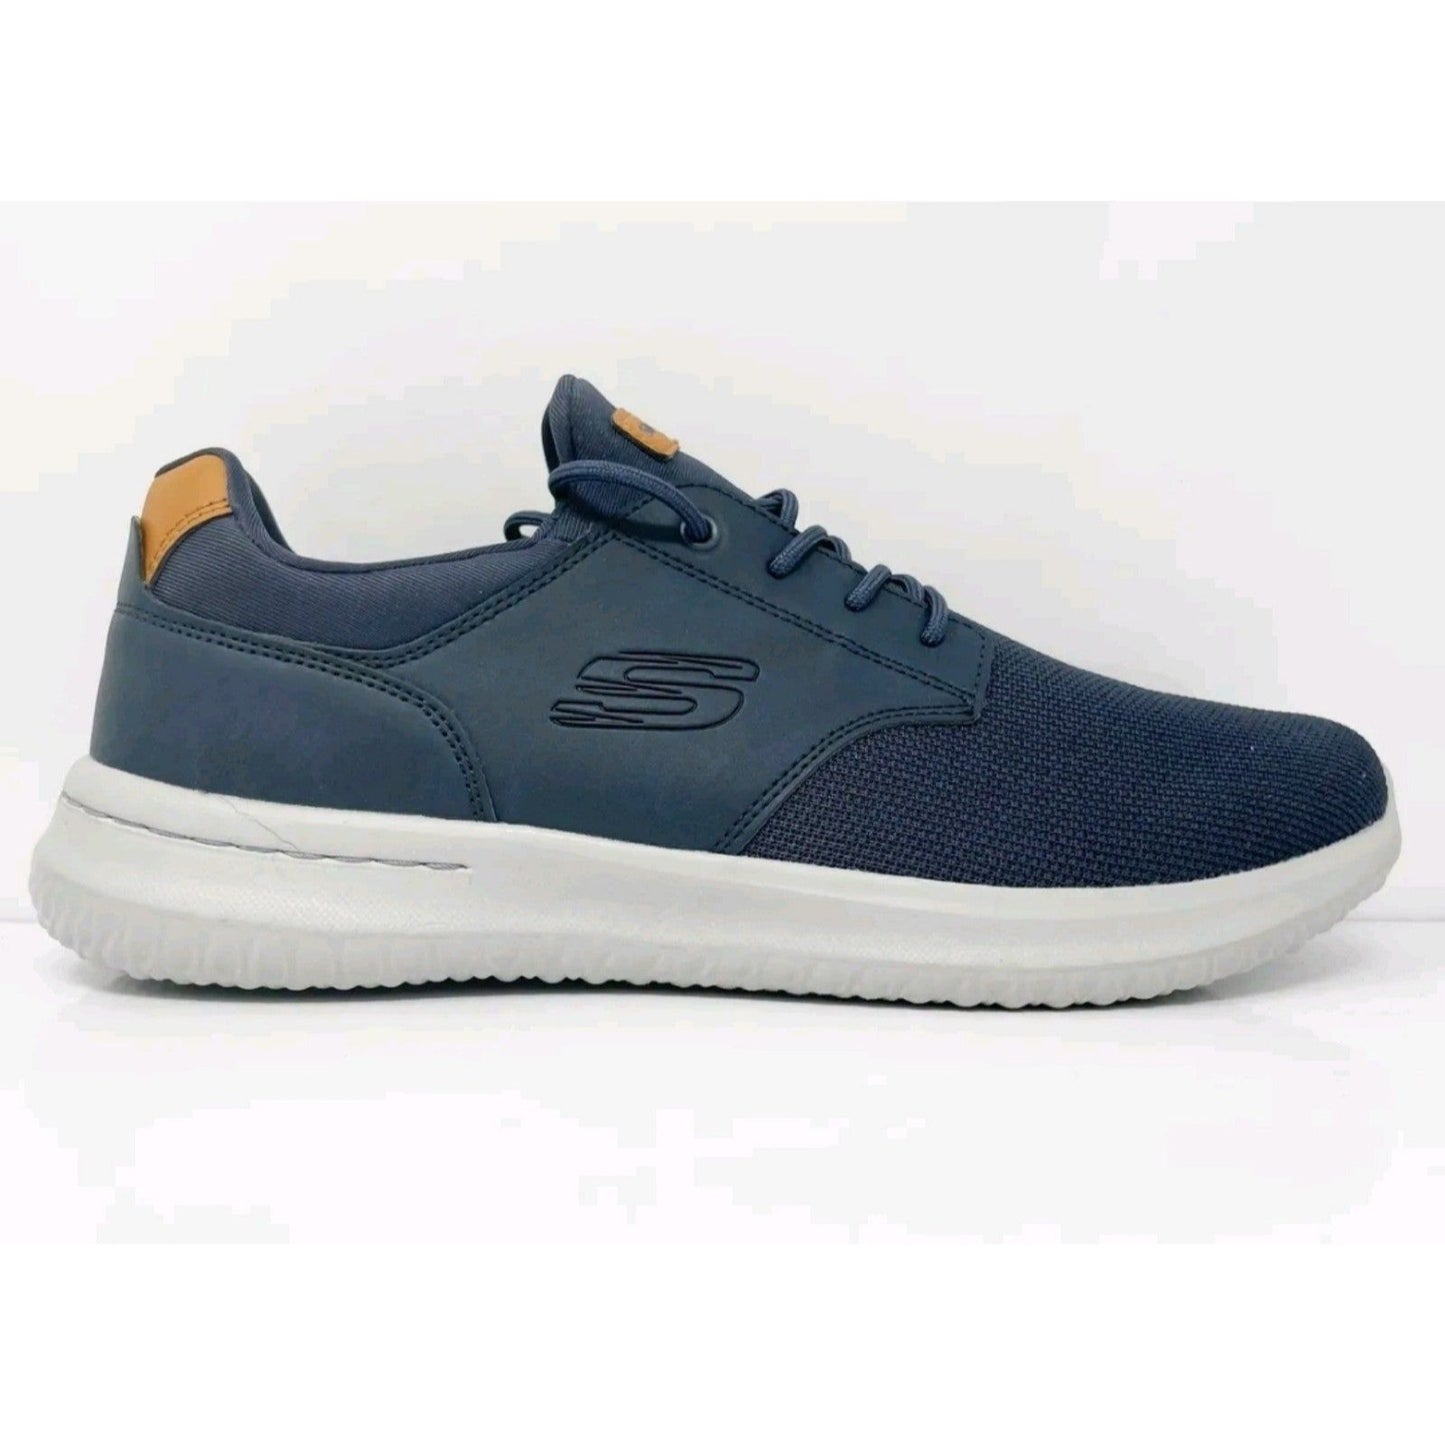 SKECHERS Sneakers DELSON 2.0 Men's Slip-On Casual Activewear shoes